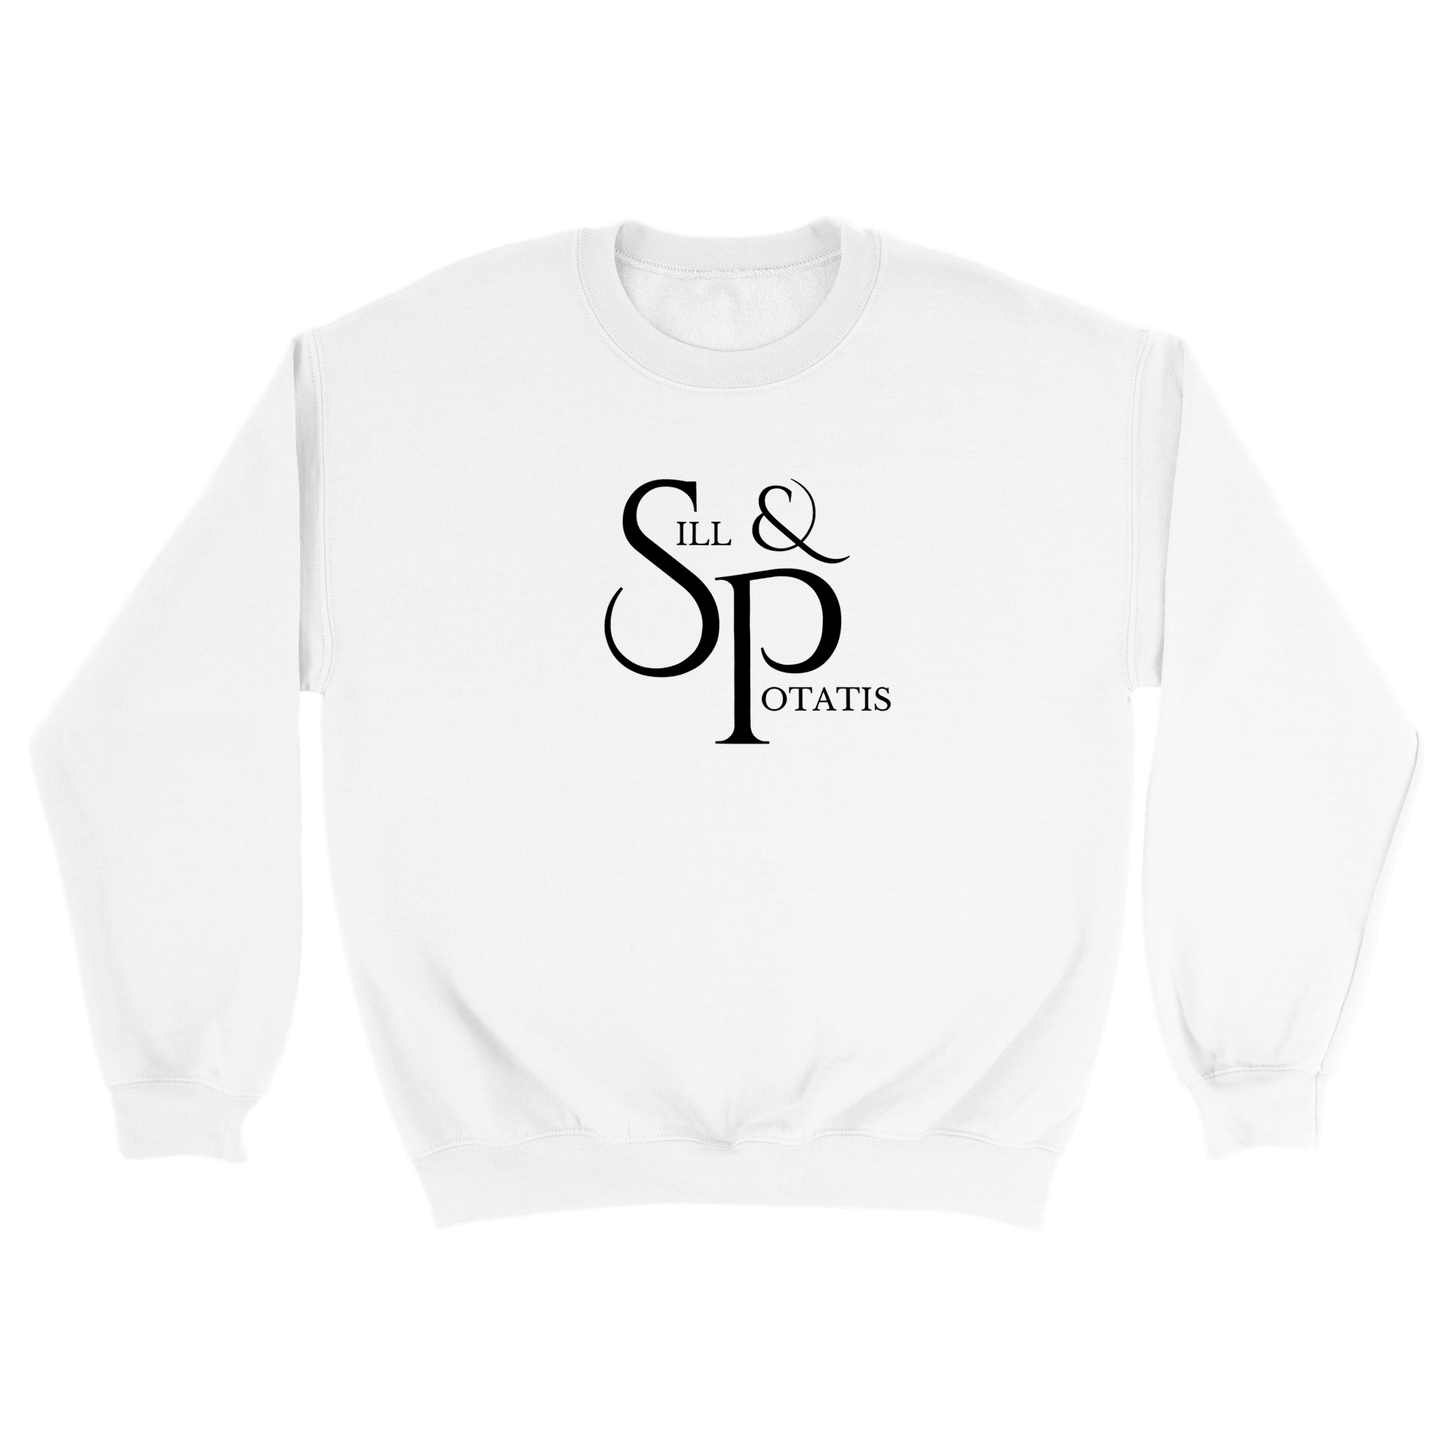 Sill & Potatis - Sweatshirt Vit